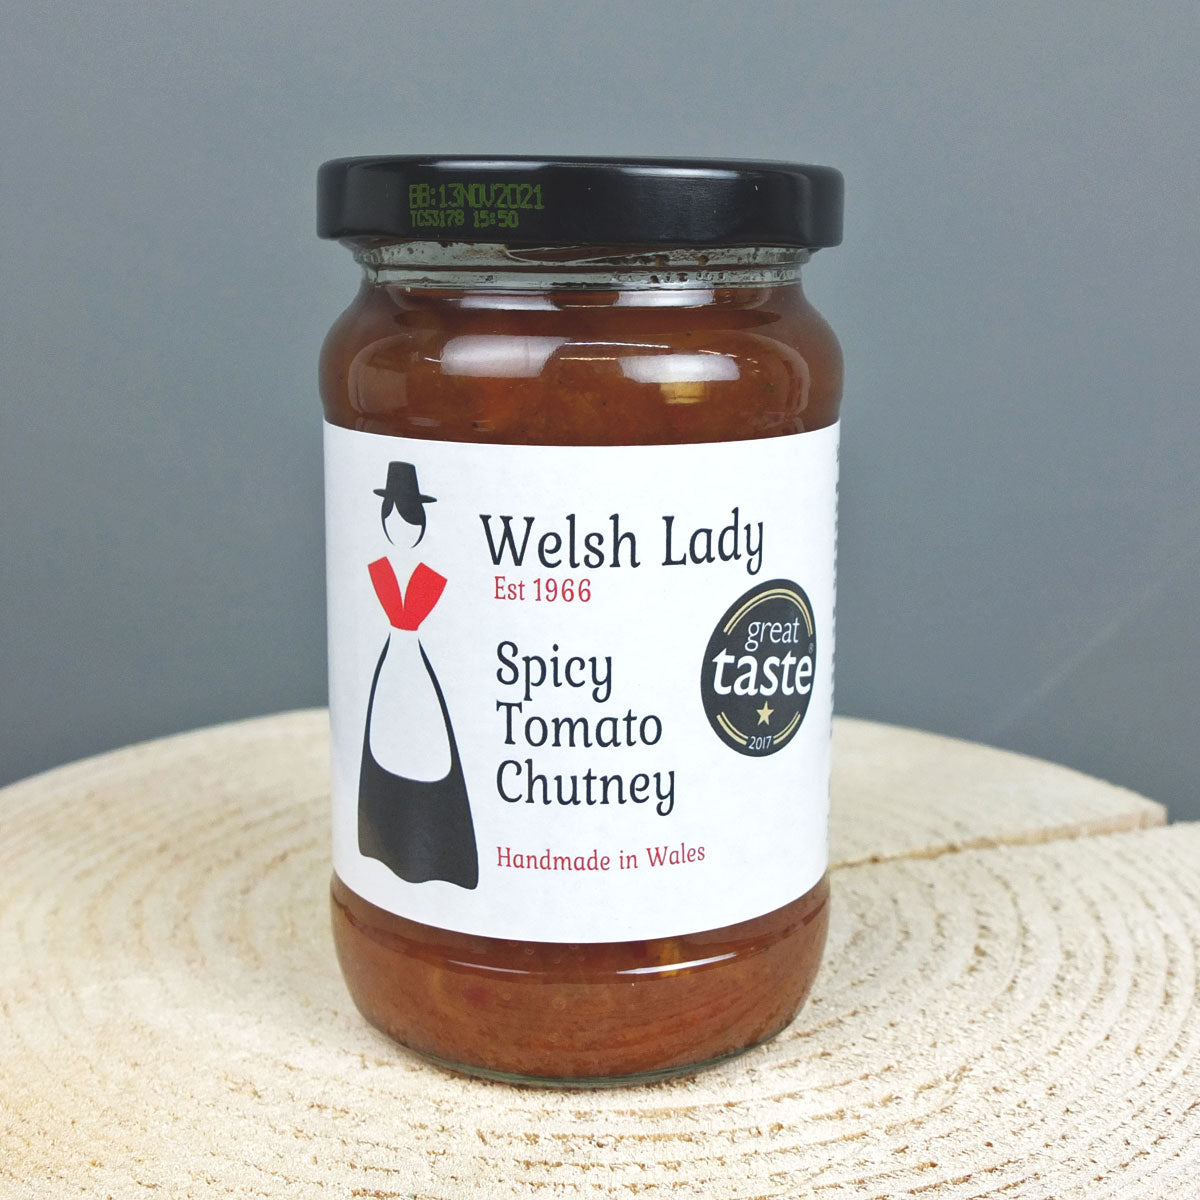 Spicy Tomato Chutney by Welsh Lady Preserves